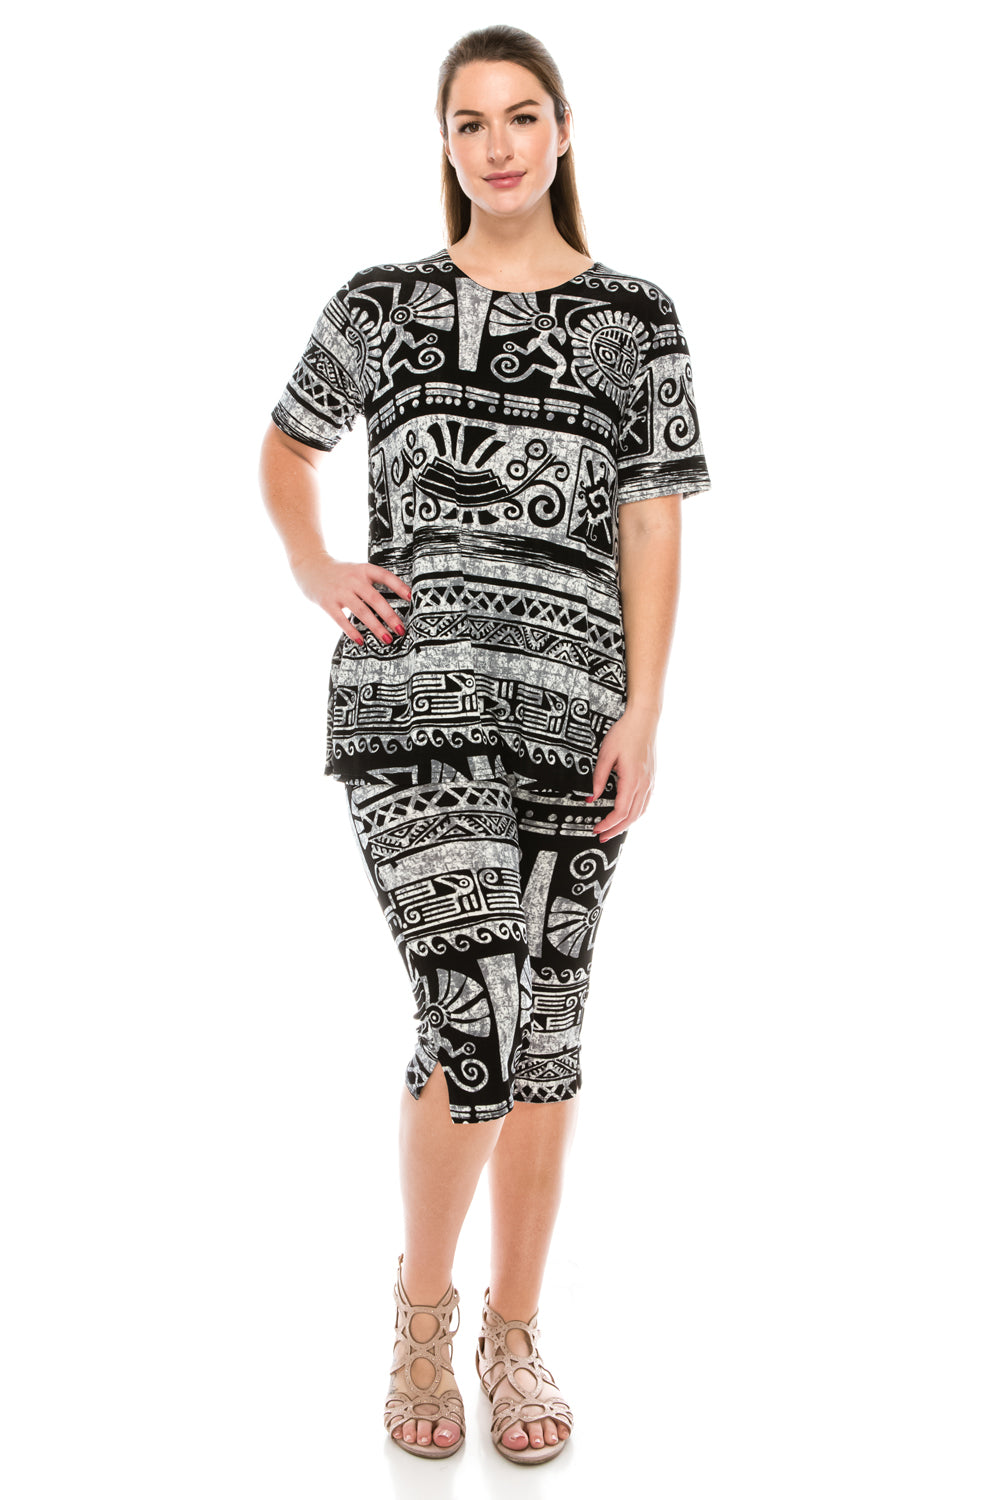 Jostar Women's Stretchy Capri Pants Set Short Sleeve Plus Print